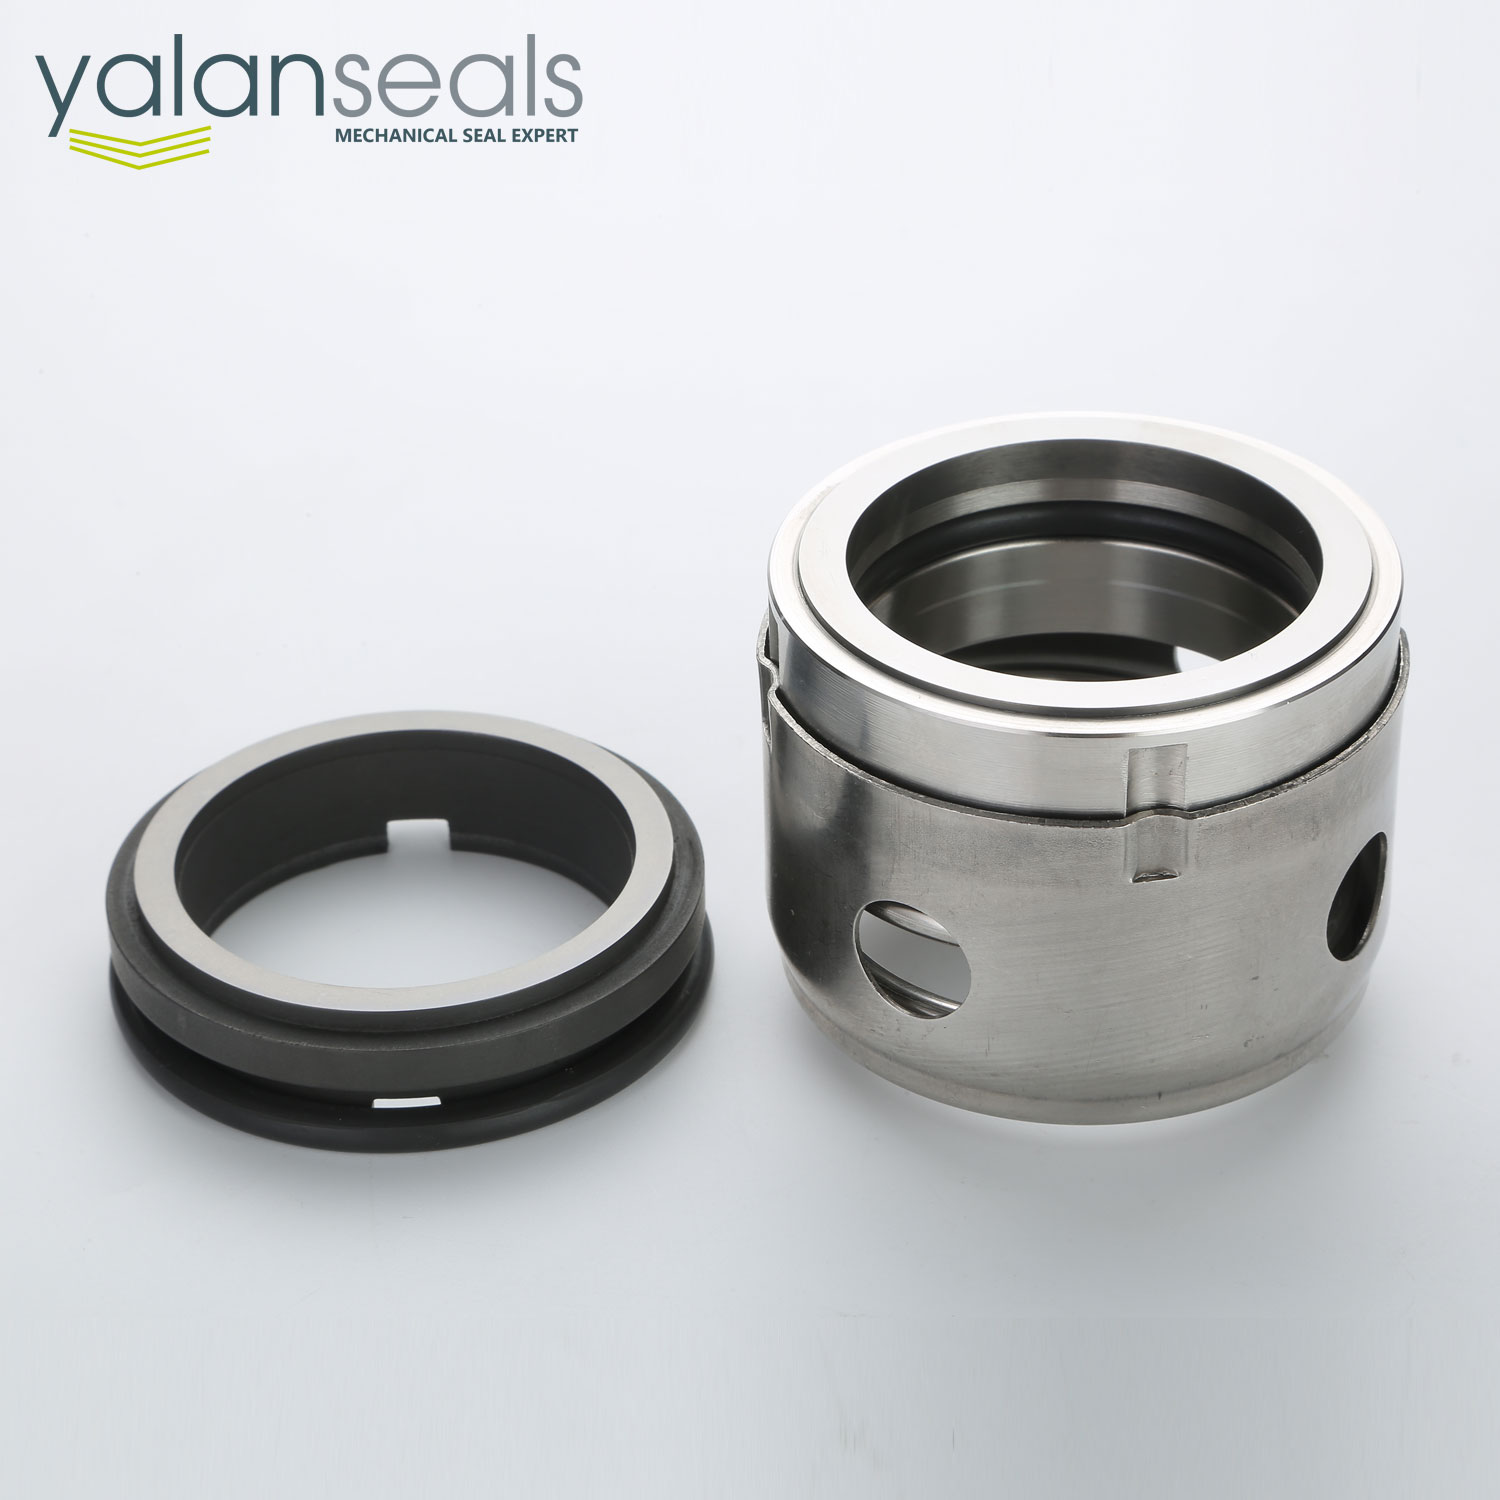 YALAN GX GB Standard Big Single Spring Mechanical Seal for Industrial Pumps